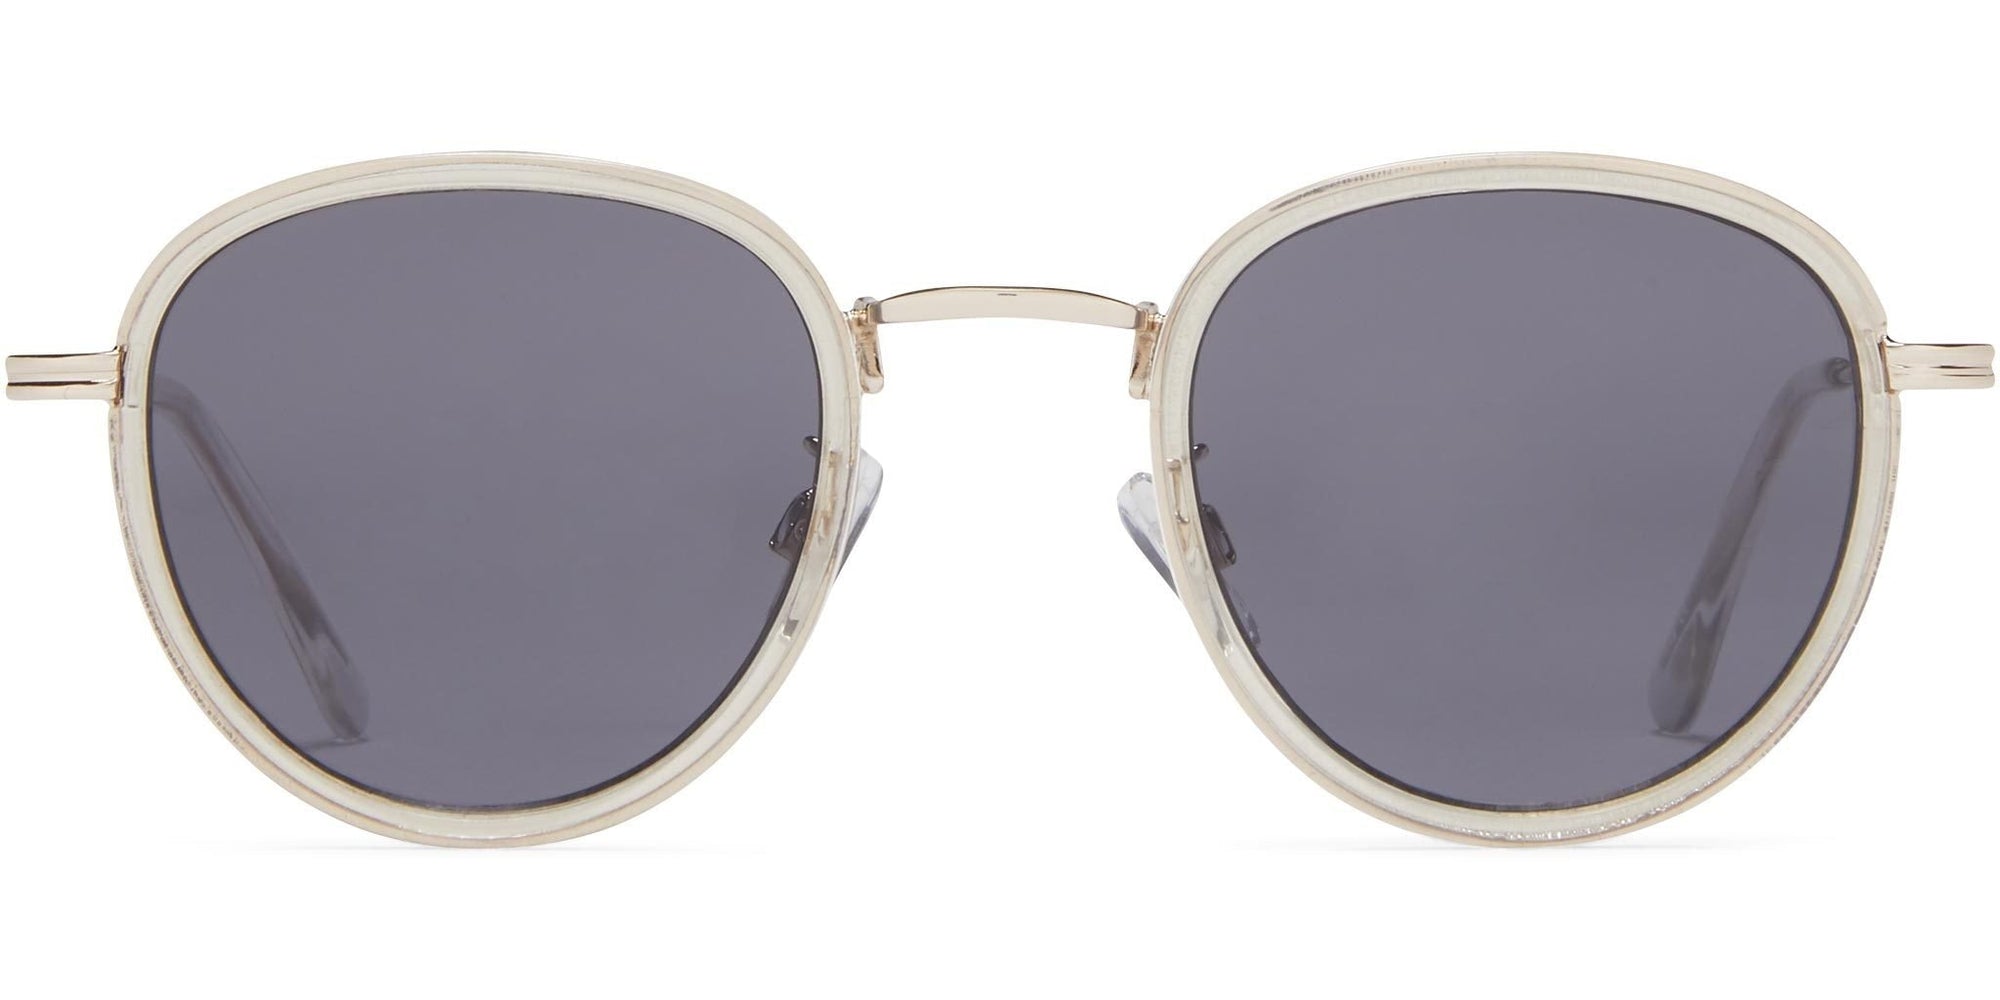 Dania - Crystal Clear/Silver/Gray Lens - Sunglasses